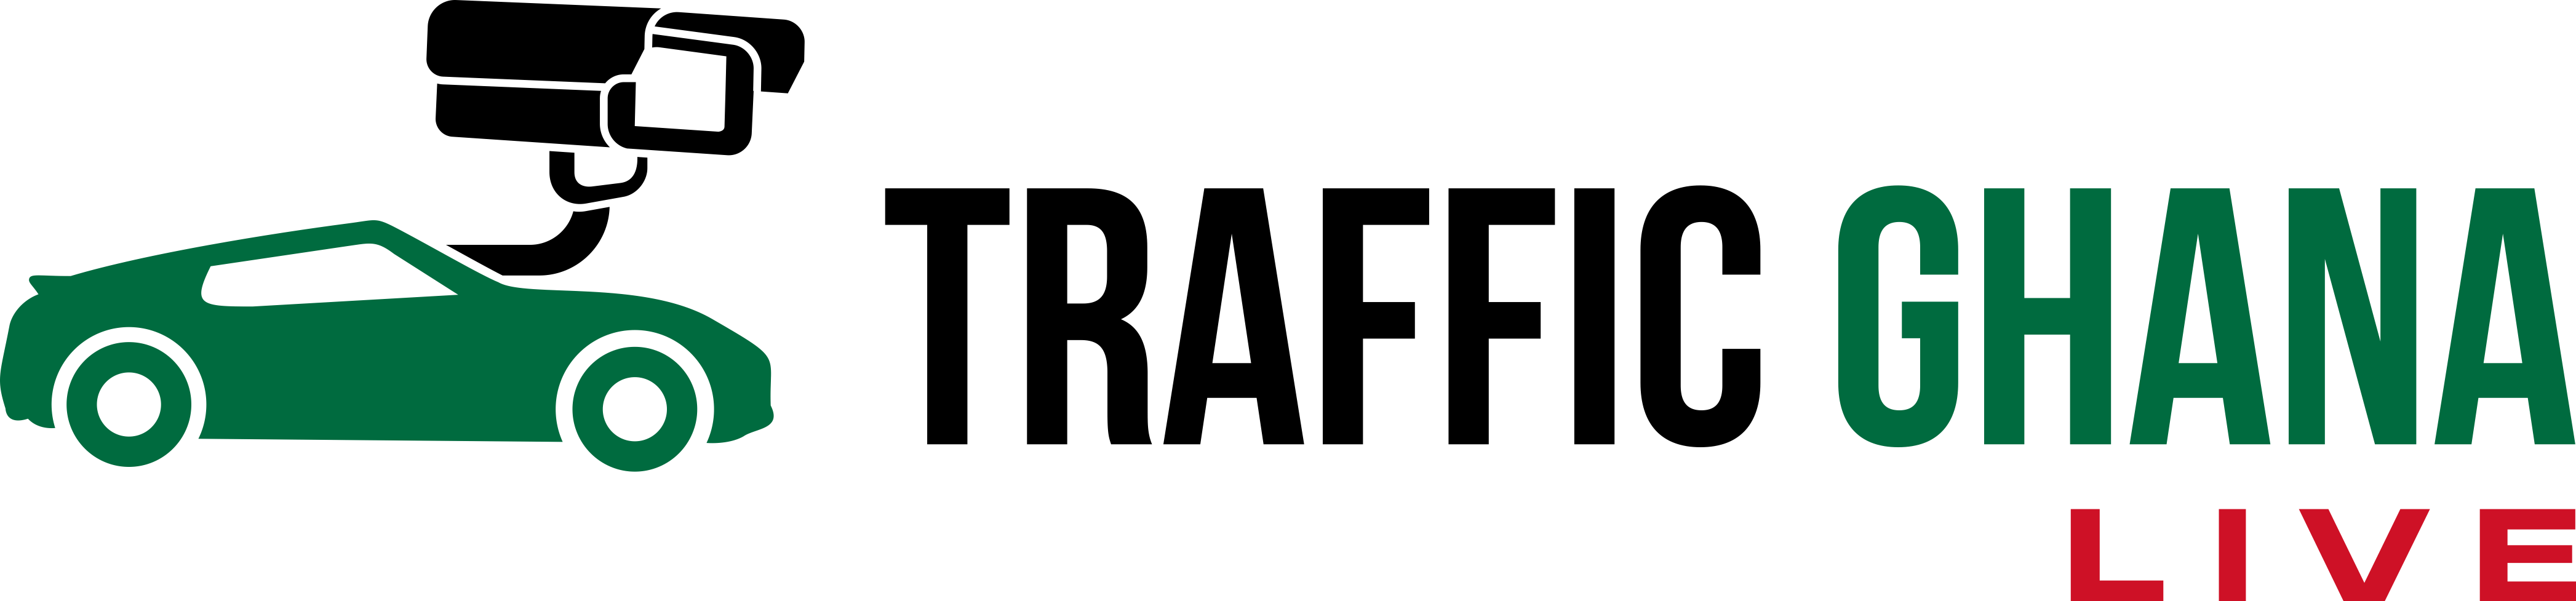 Traffic.com Logo - Accra Archives Ghana Live